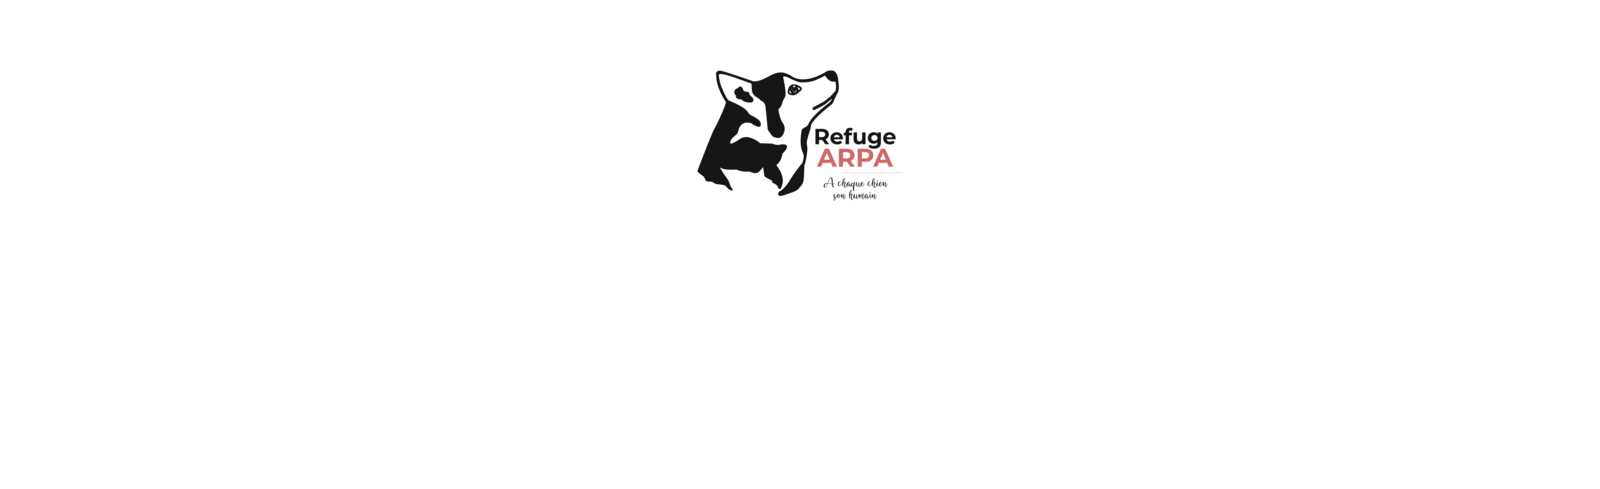 Refuge ARPA 91 | Pour chiens